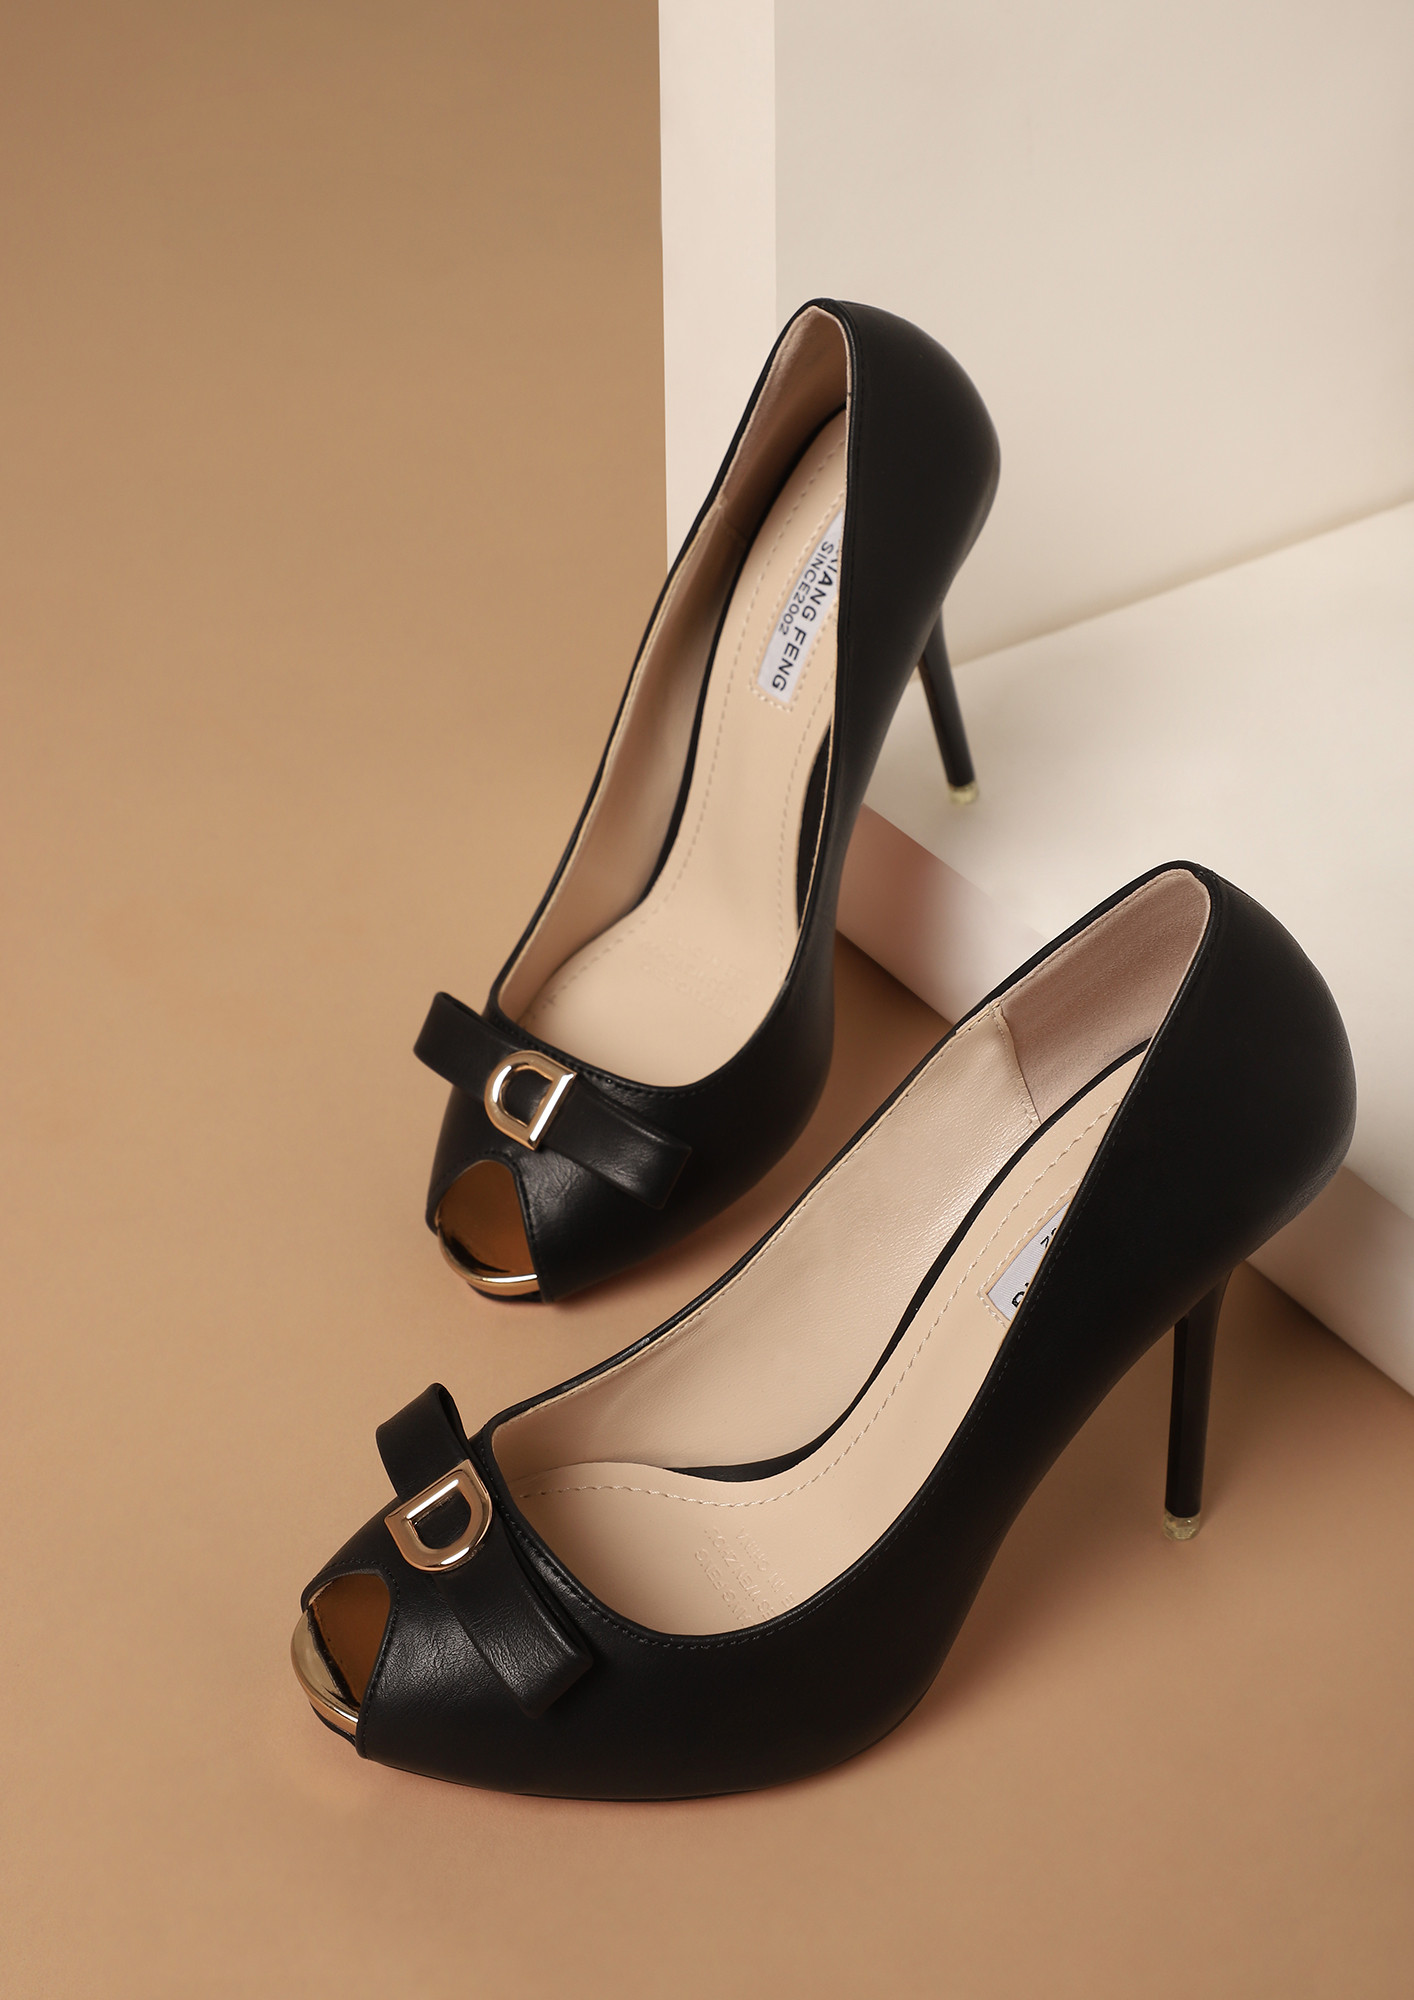 GIANVITO ROSSI: High heel shoes woman - Crimson | GIANVITO ROSSI high heel  shoes G4038970RICVEL online at GIGLIO.COM